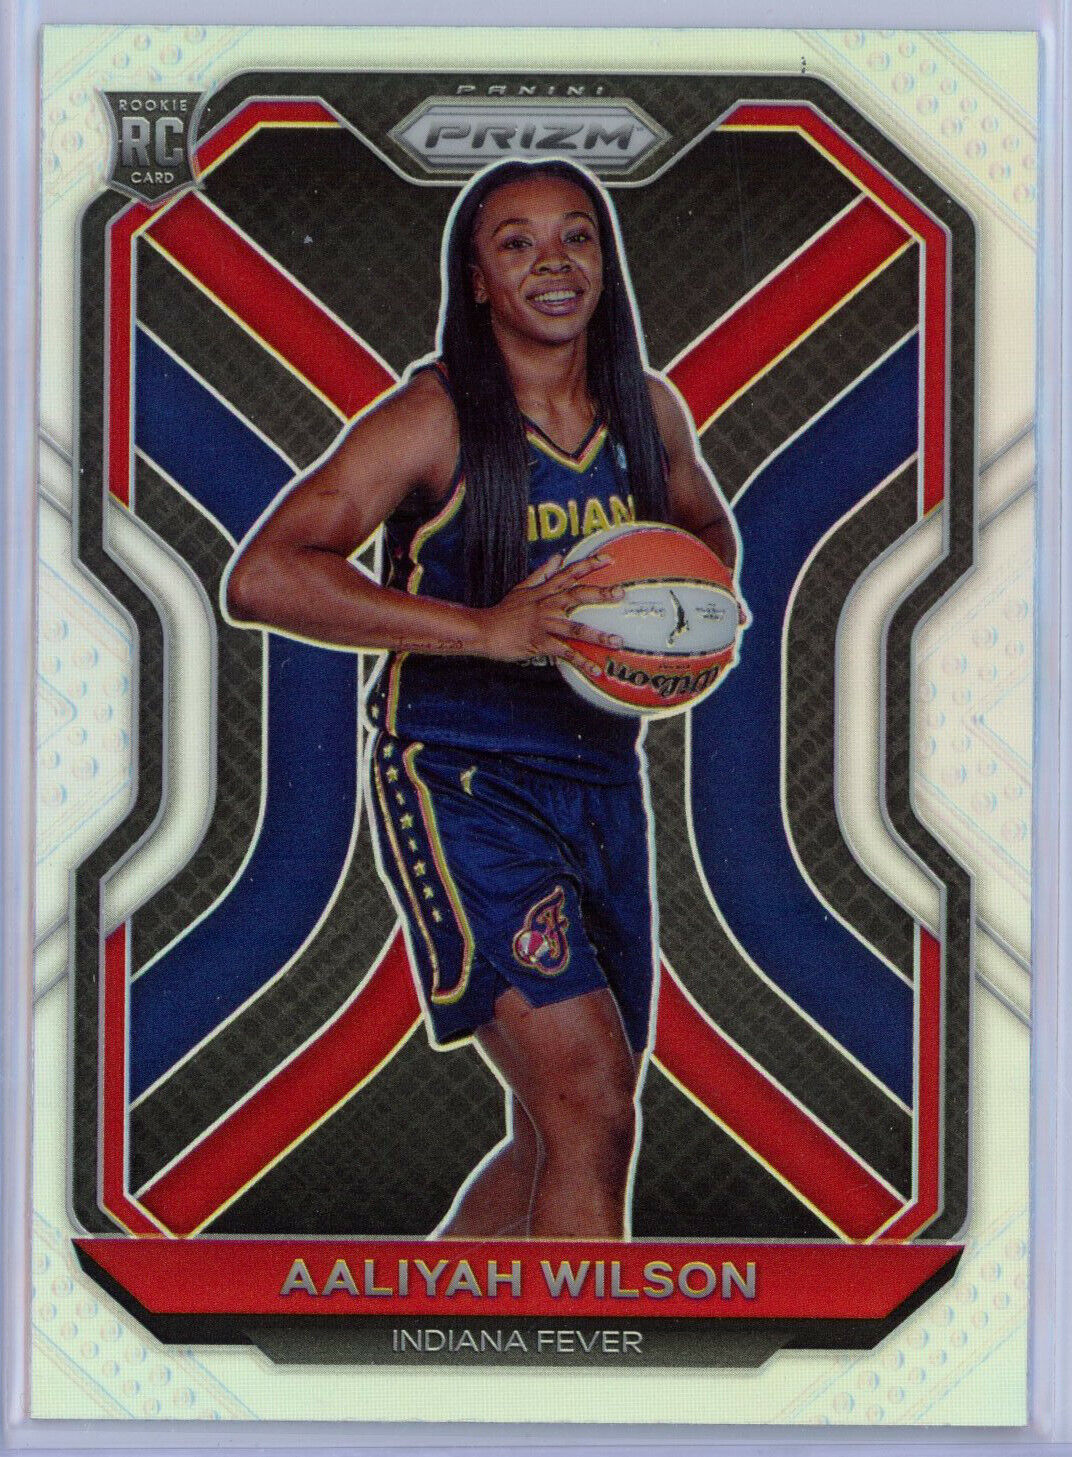 2021 WNBA Prizm AALIYAH WILSON RC #99 Silver Indiana Fever - BEAUTIFUL CARD